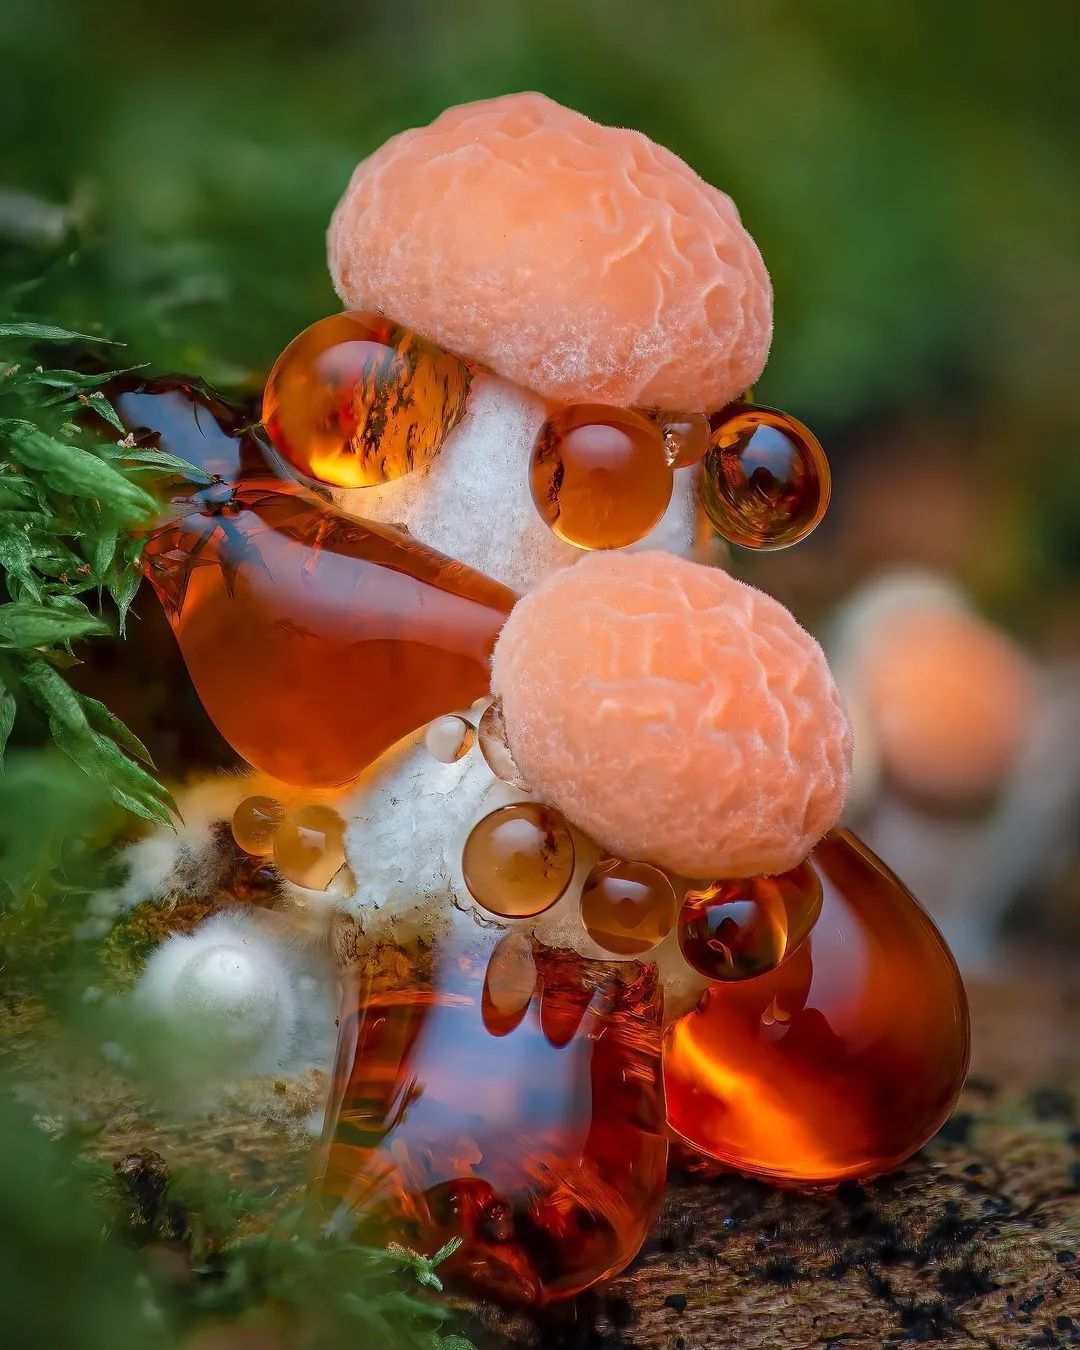 Weird mushroom Wrinkled peach